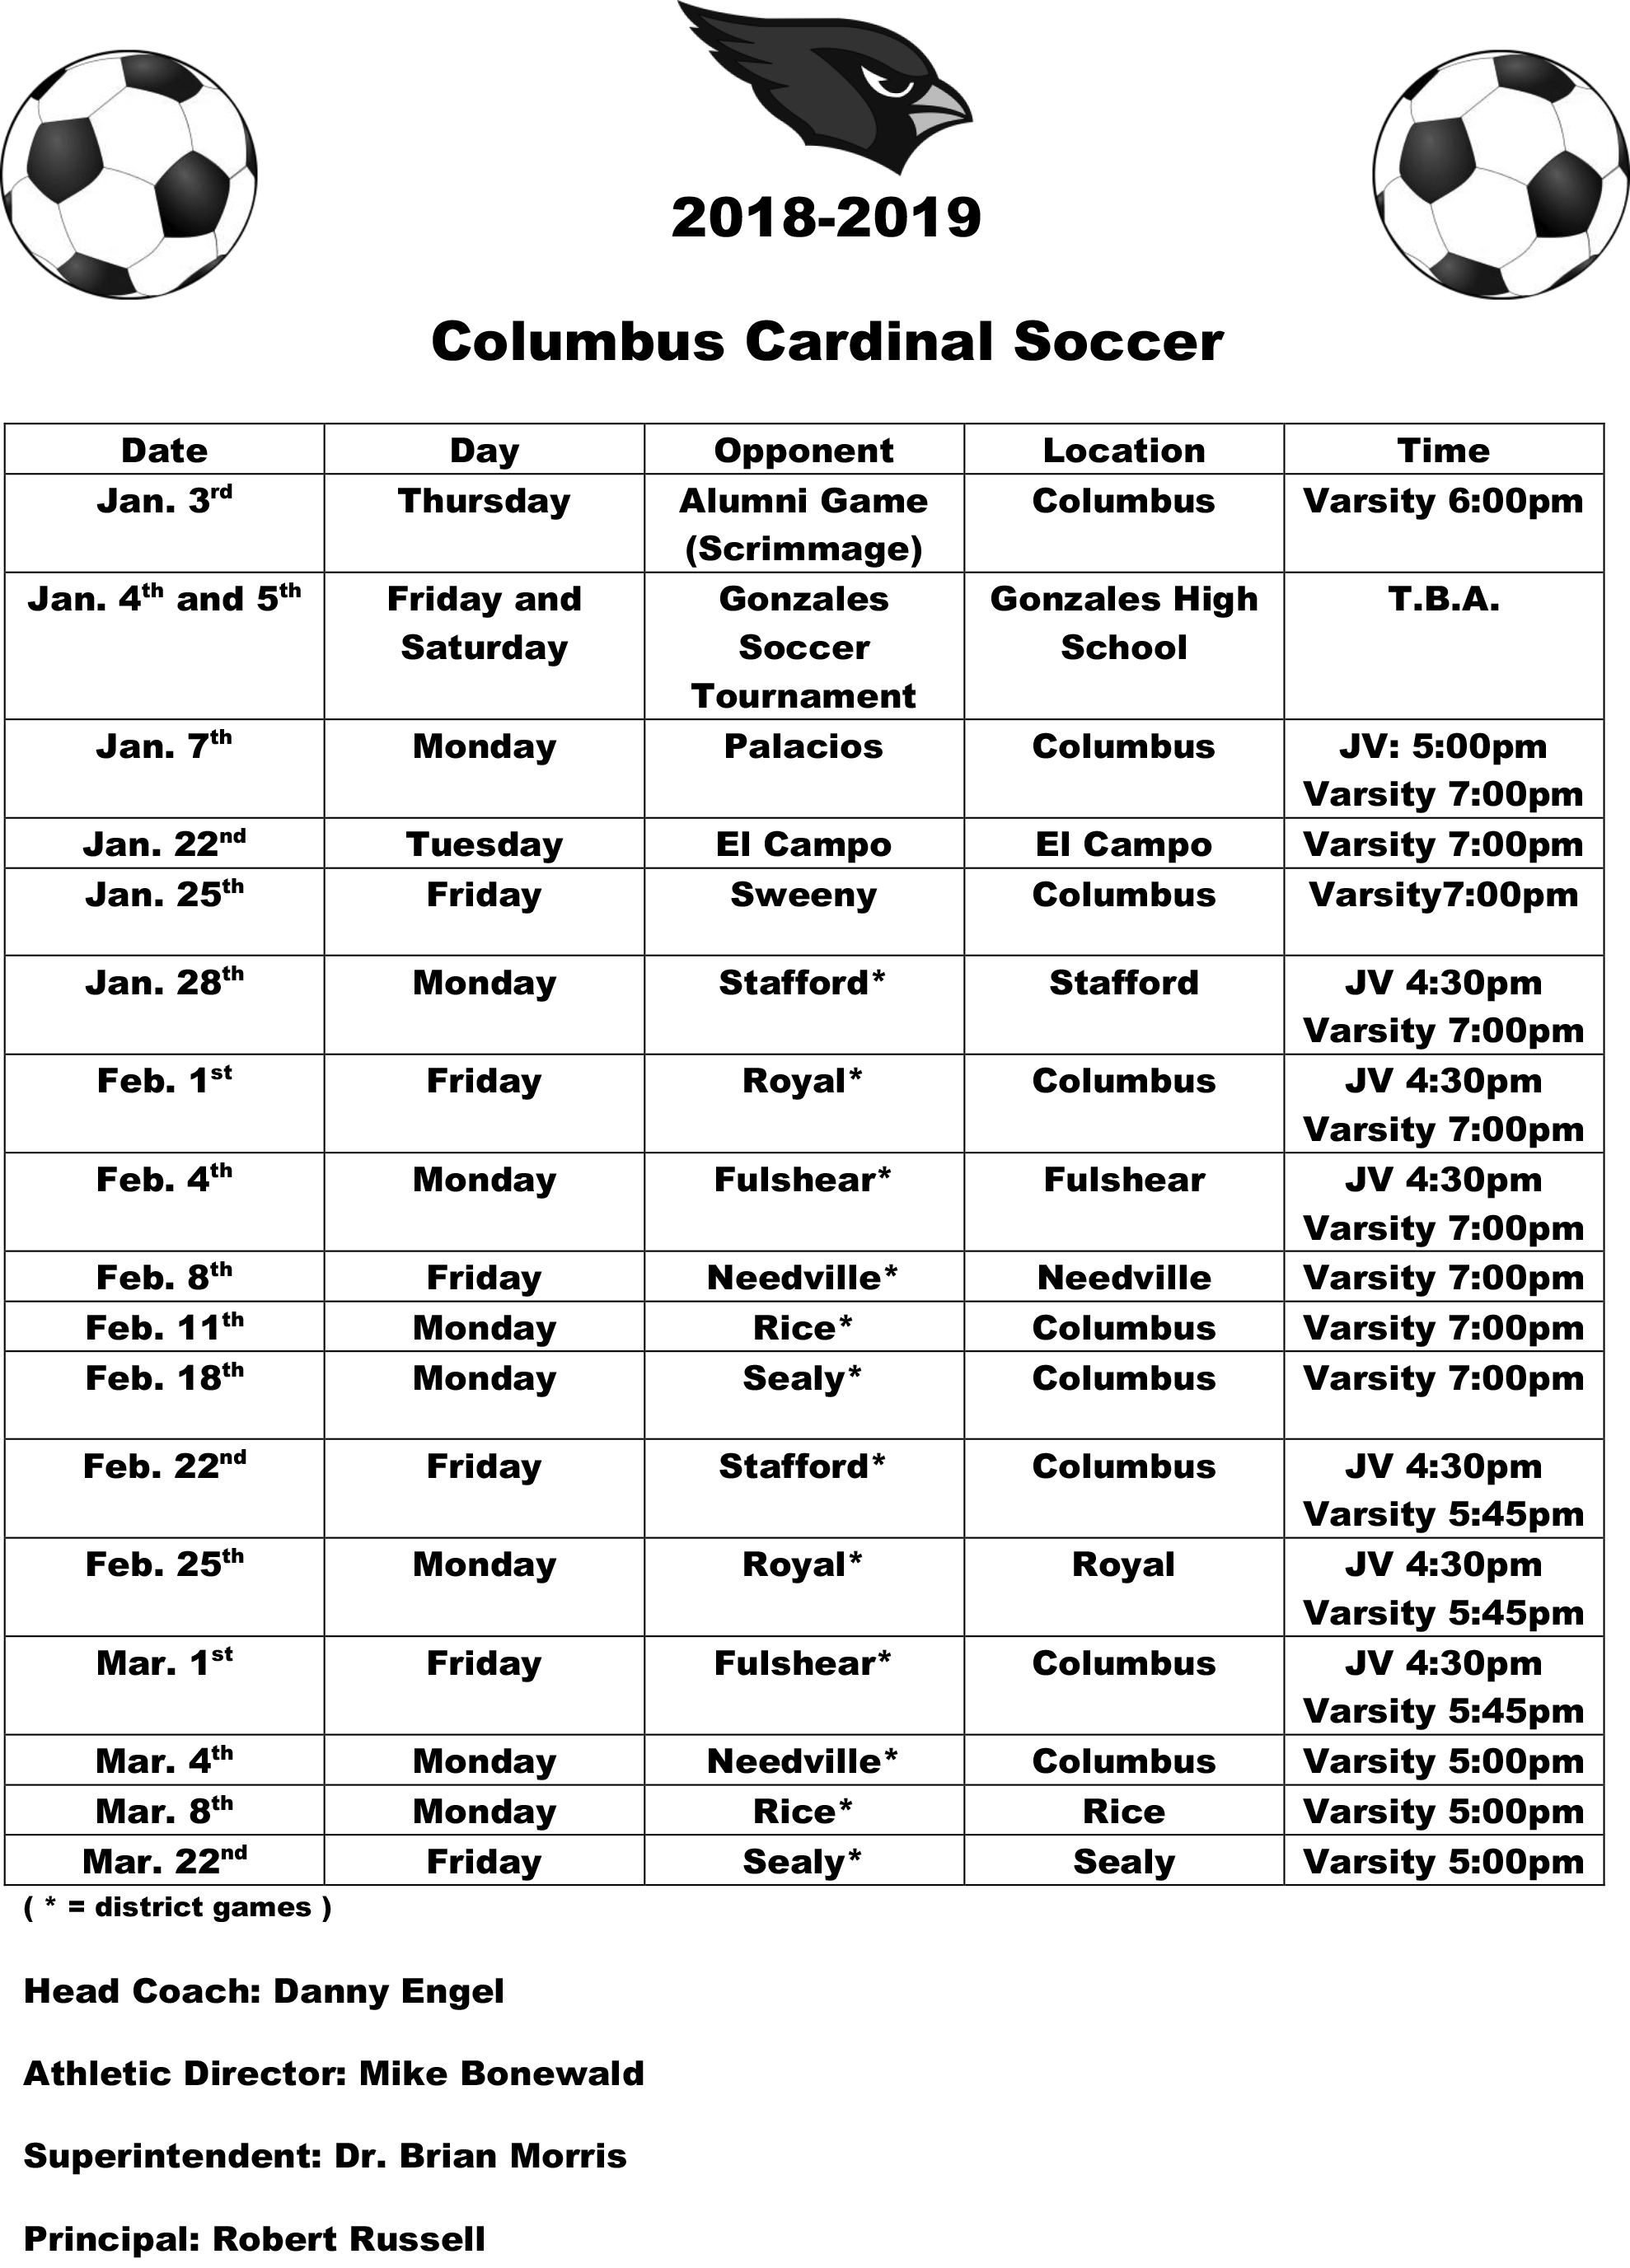 2018-2019 Columbus Boys Soccer Schedule